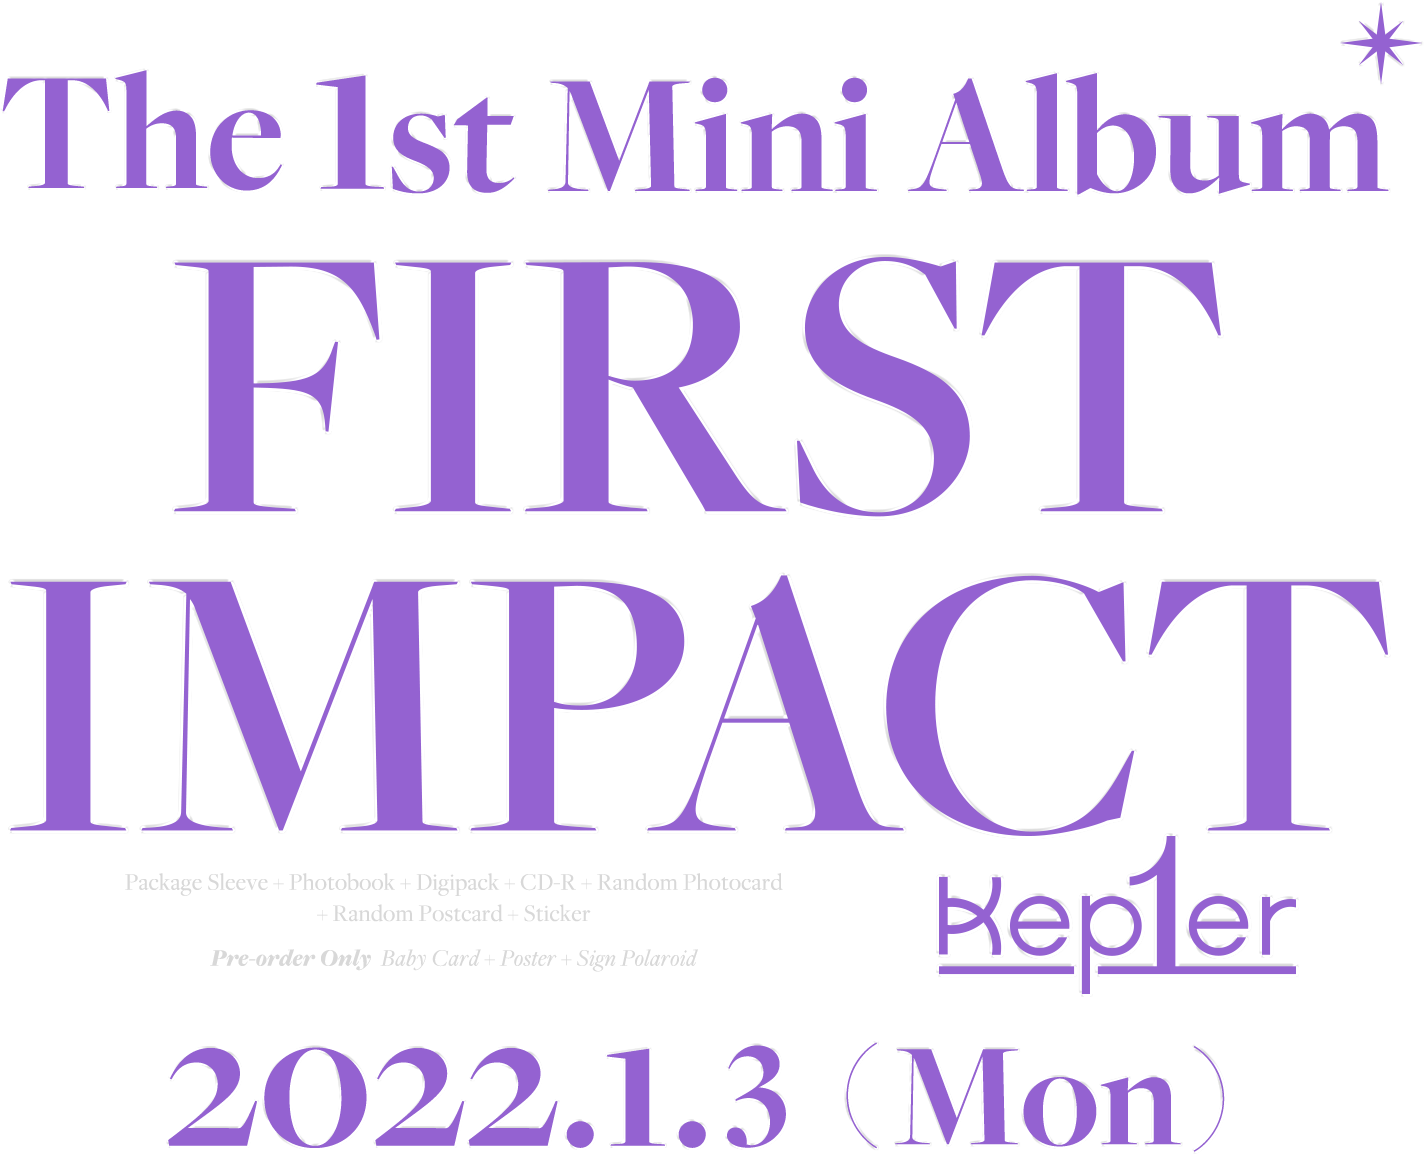 Kep1er The 1st Mini Album FIRST IMPACT 2022.1.3 (Mon)